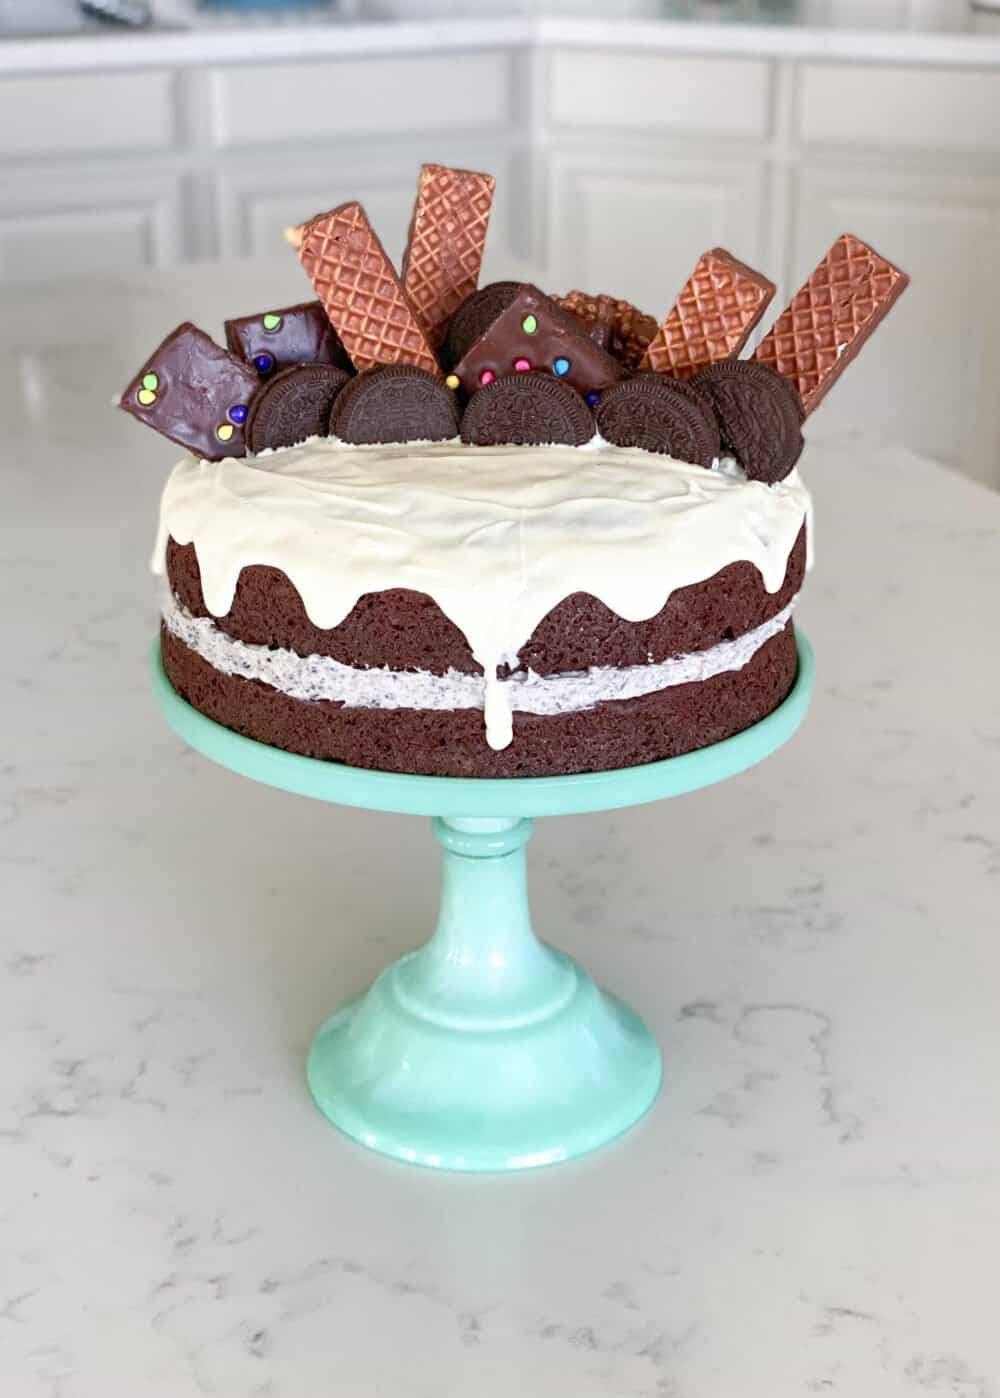 Happy Birthday Cakes Images
 A Very Happy Birthday Cake Recipe